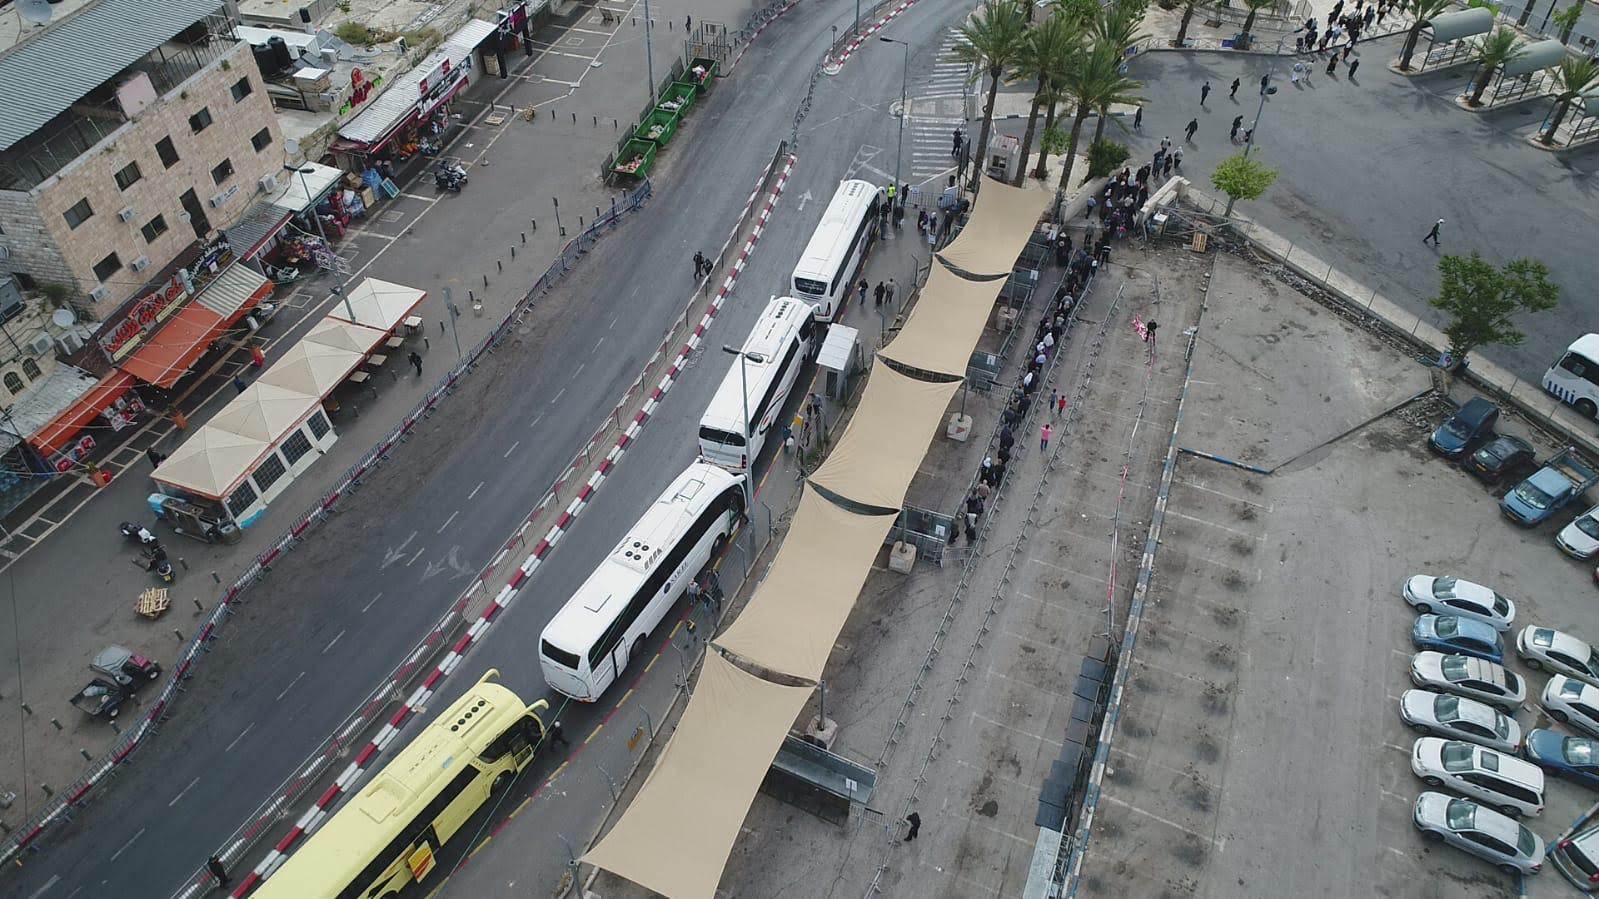 La entrada a Jerusalem fue en numerosos buses llegados de Cisjordania